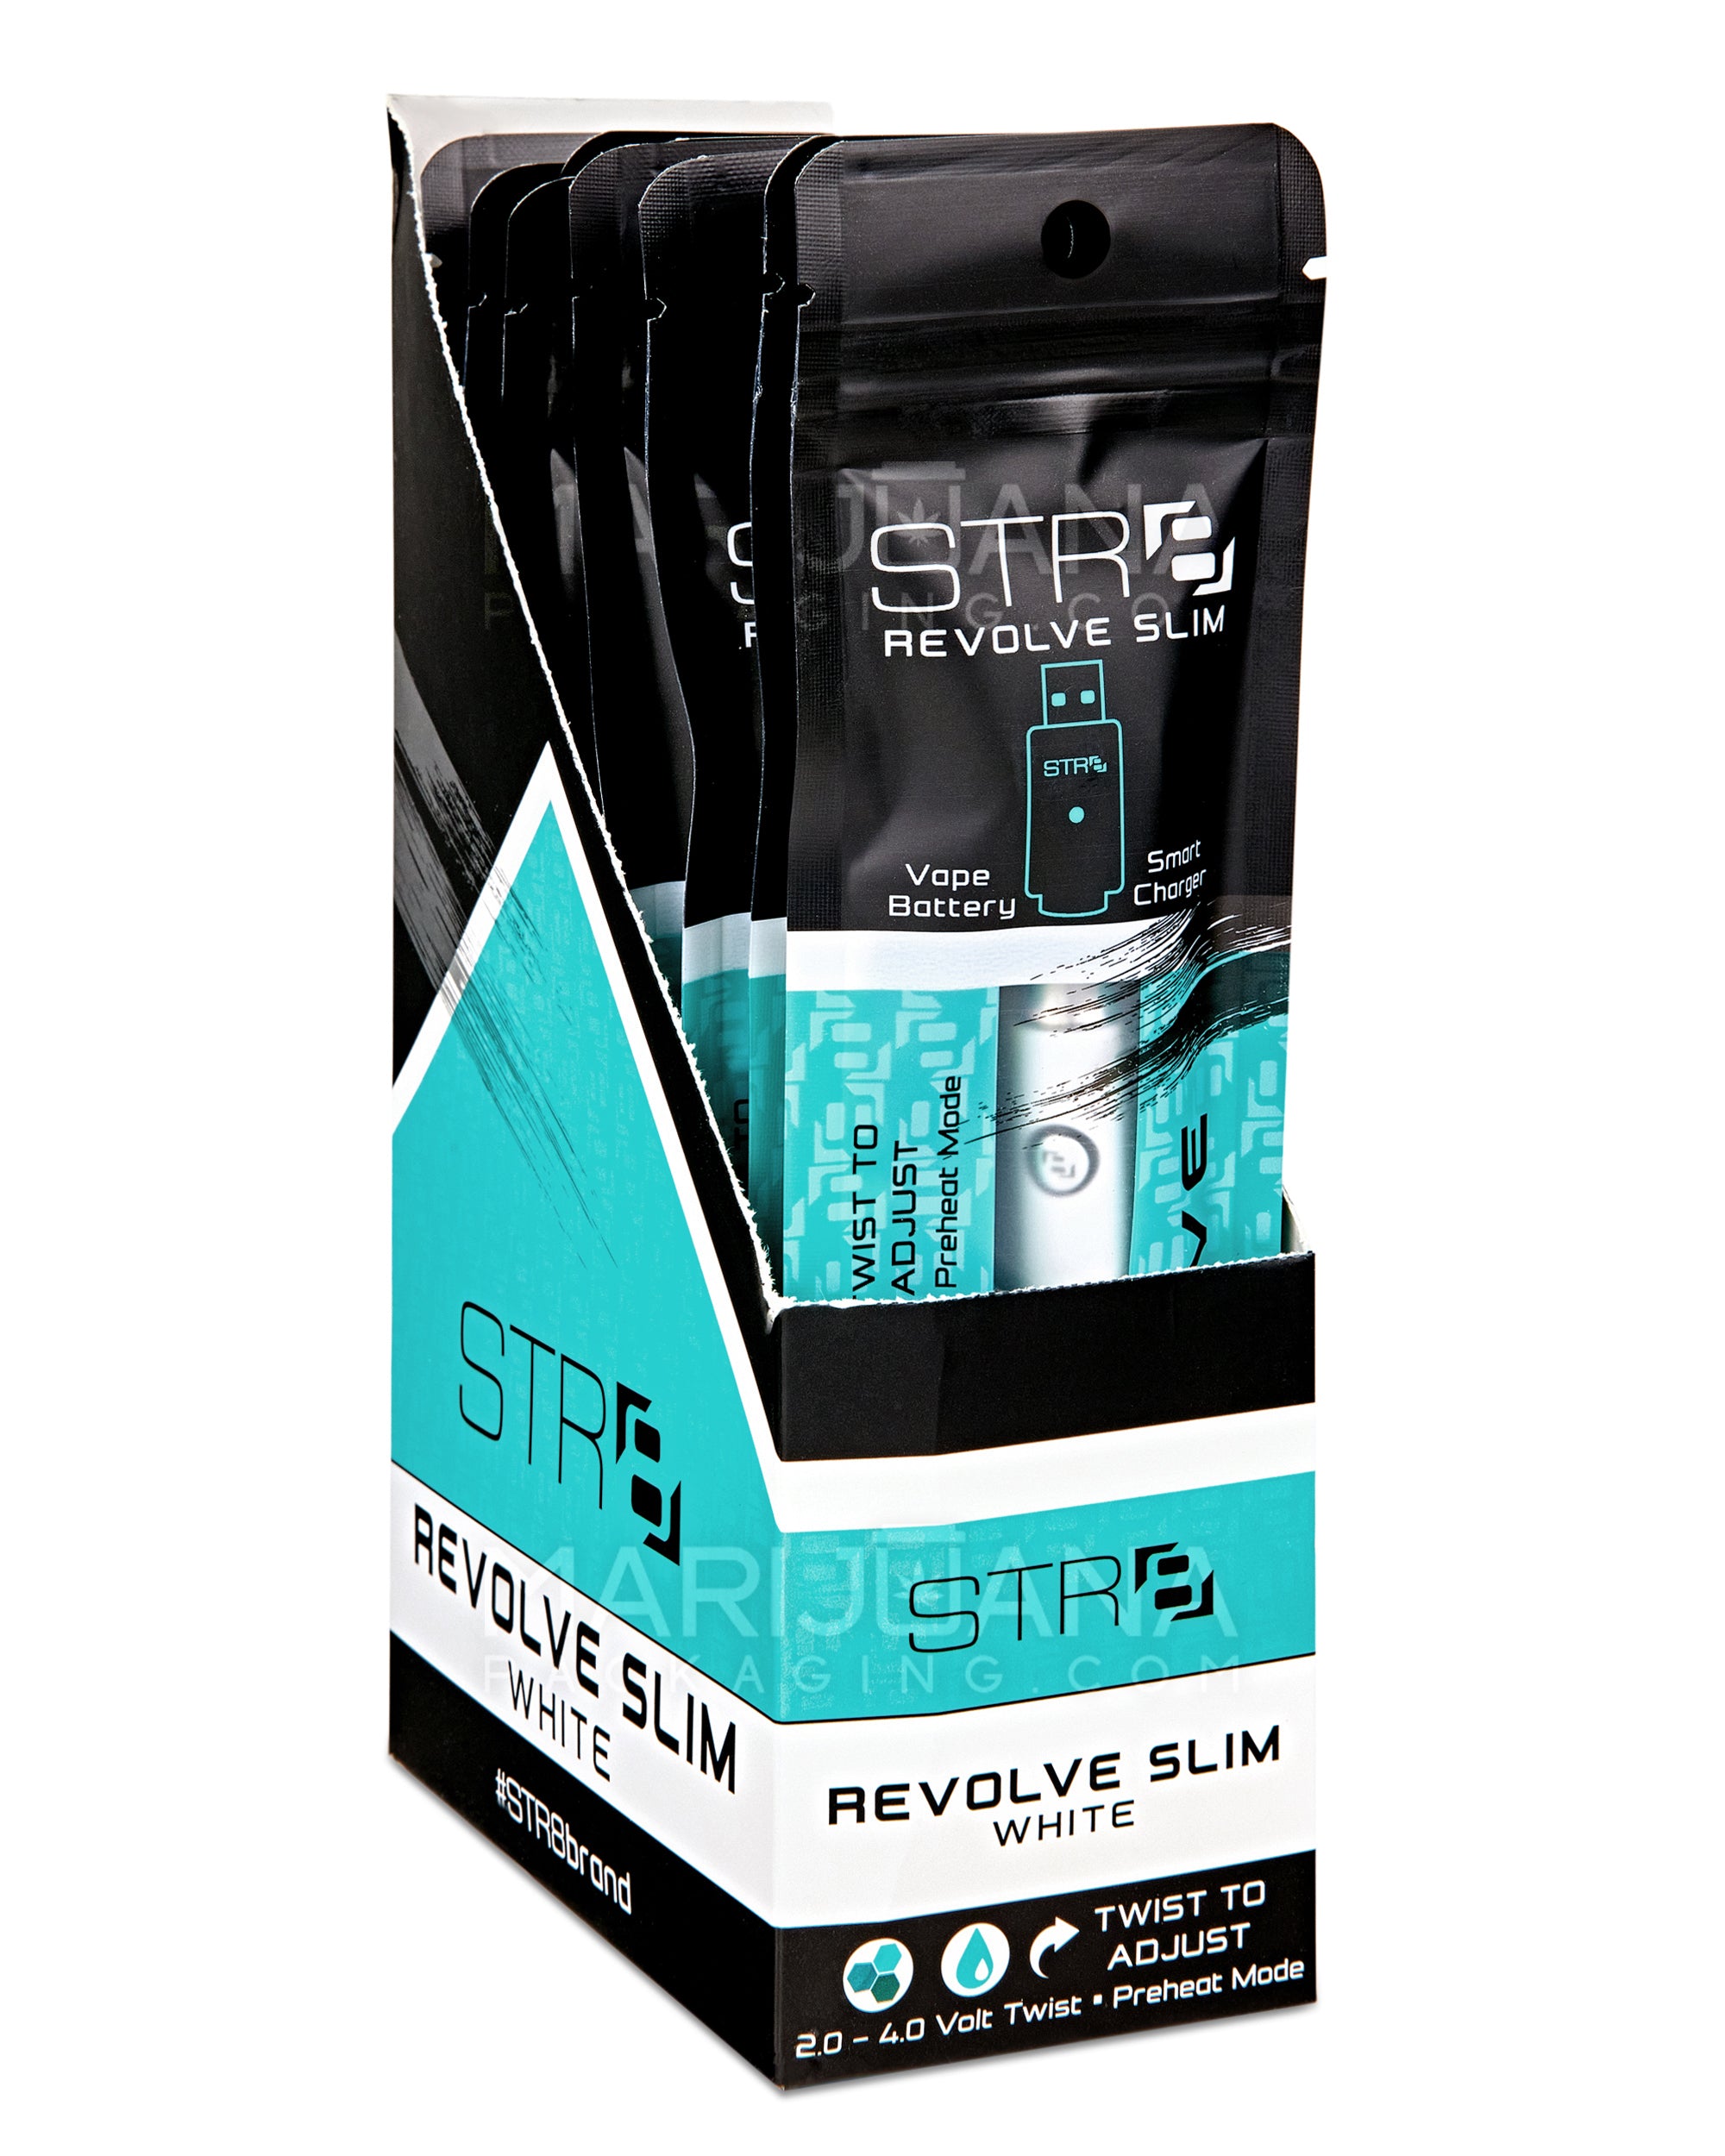 STR8 | Revolve Slim Vape Batteries with Charger | 320mAh - White - 10 Count - 1